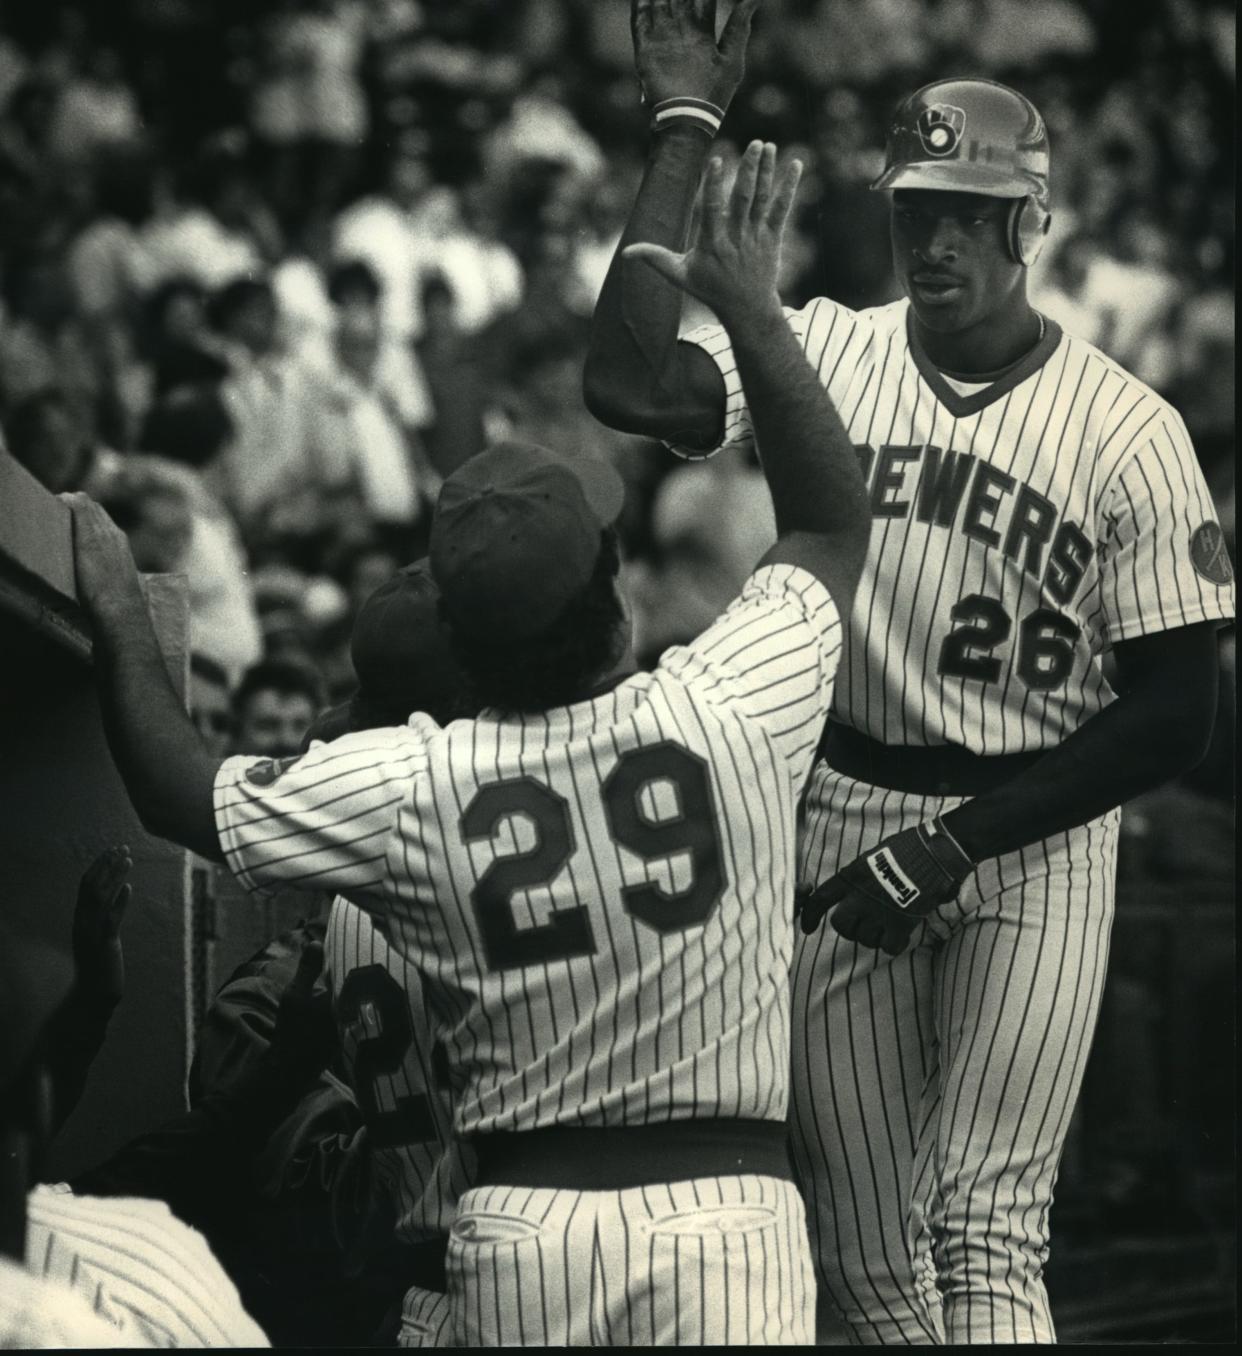 Glenn Braggs (right) receives a high five from teammate Chris Bosio following Braggs' three-run homer in 1988.